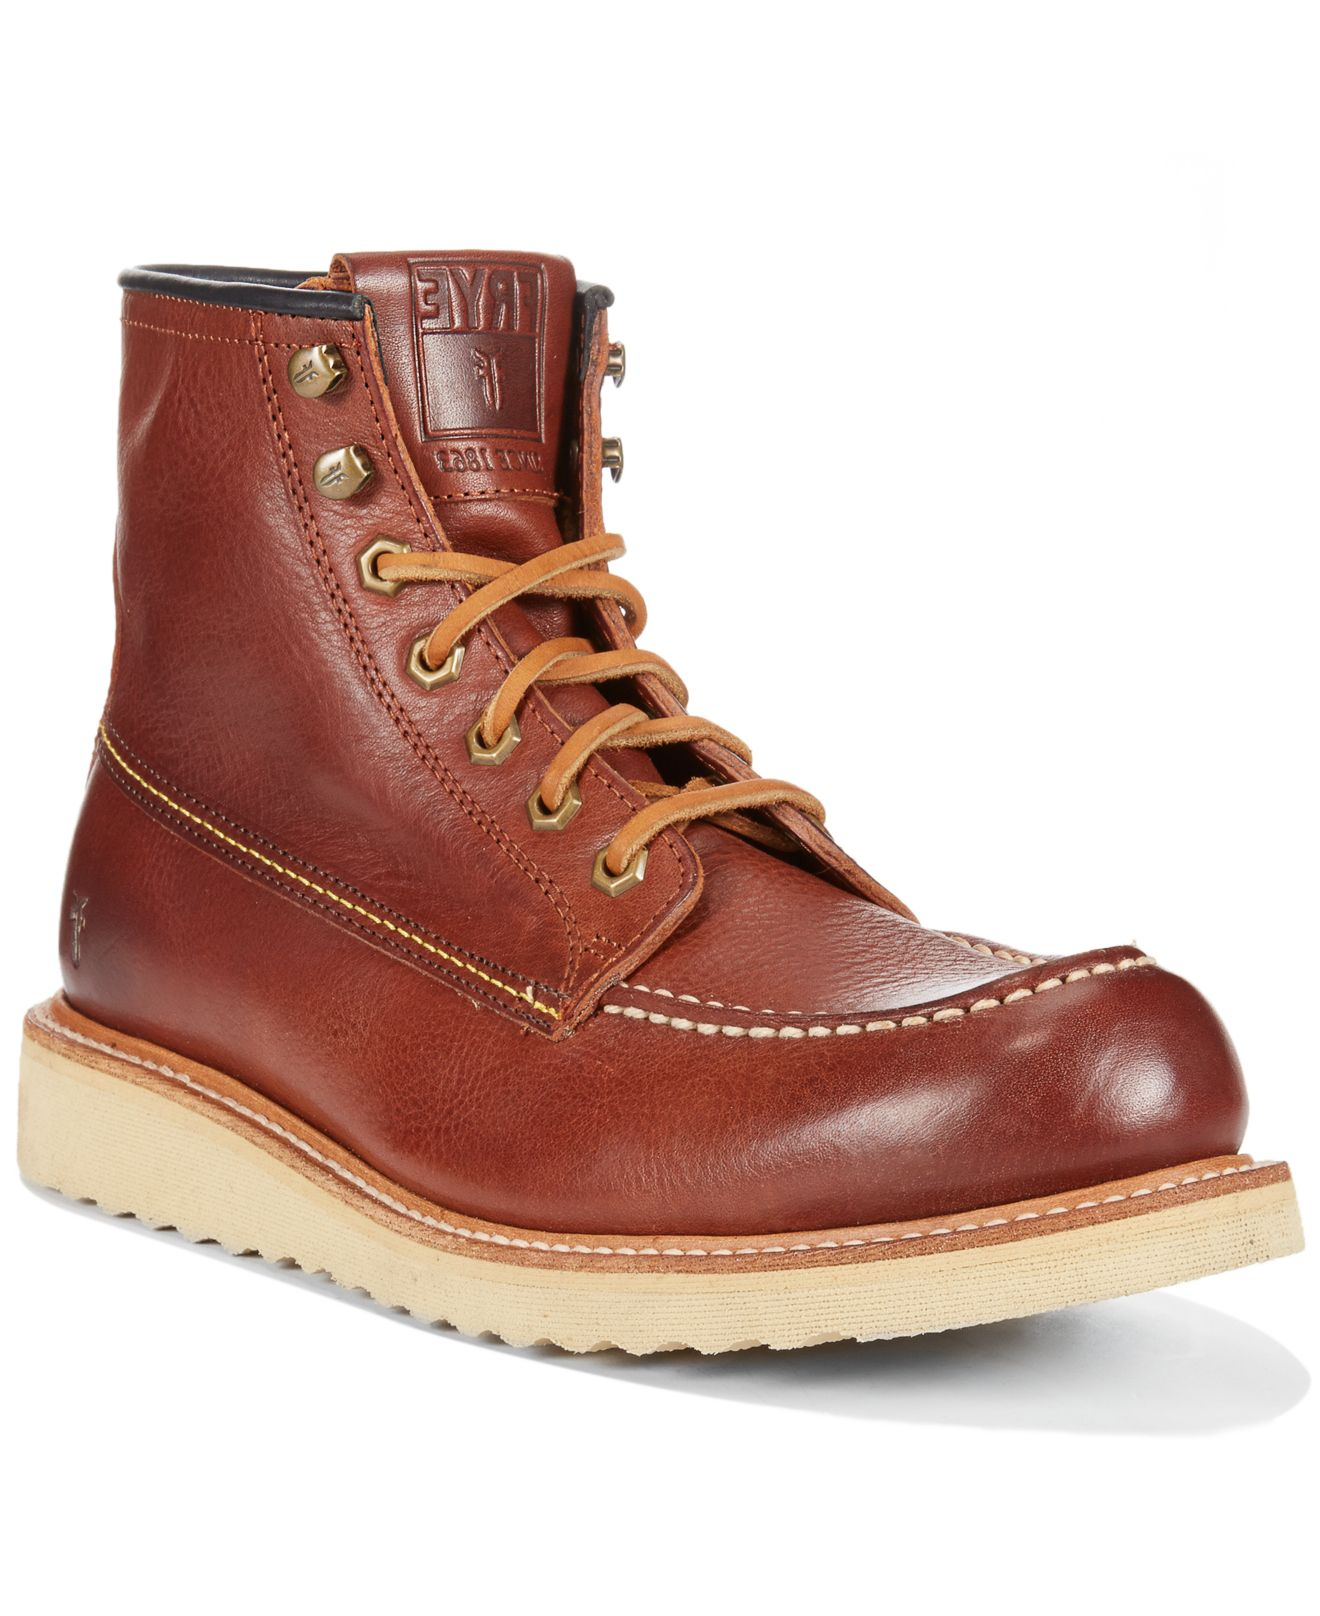 Frye Dakota Wedge Boots in Brown for Men - Lyst